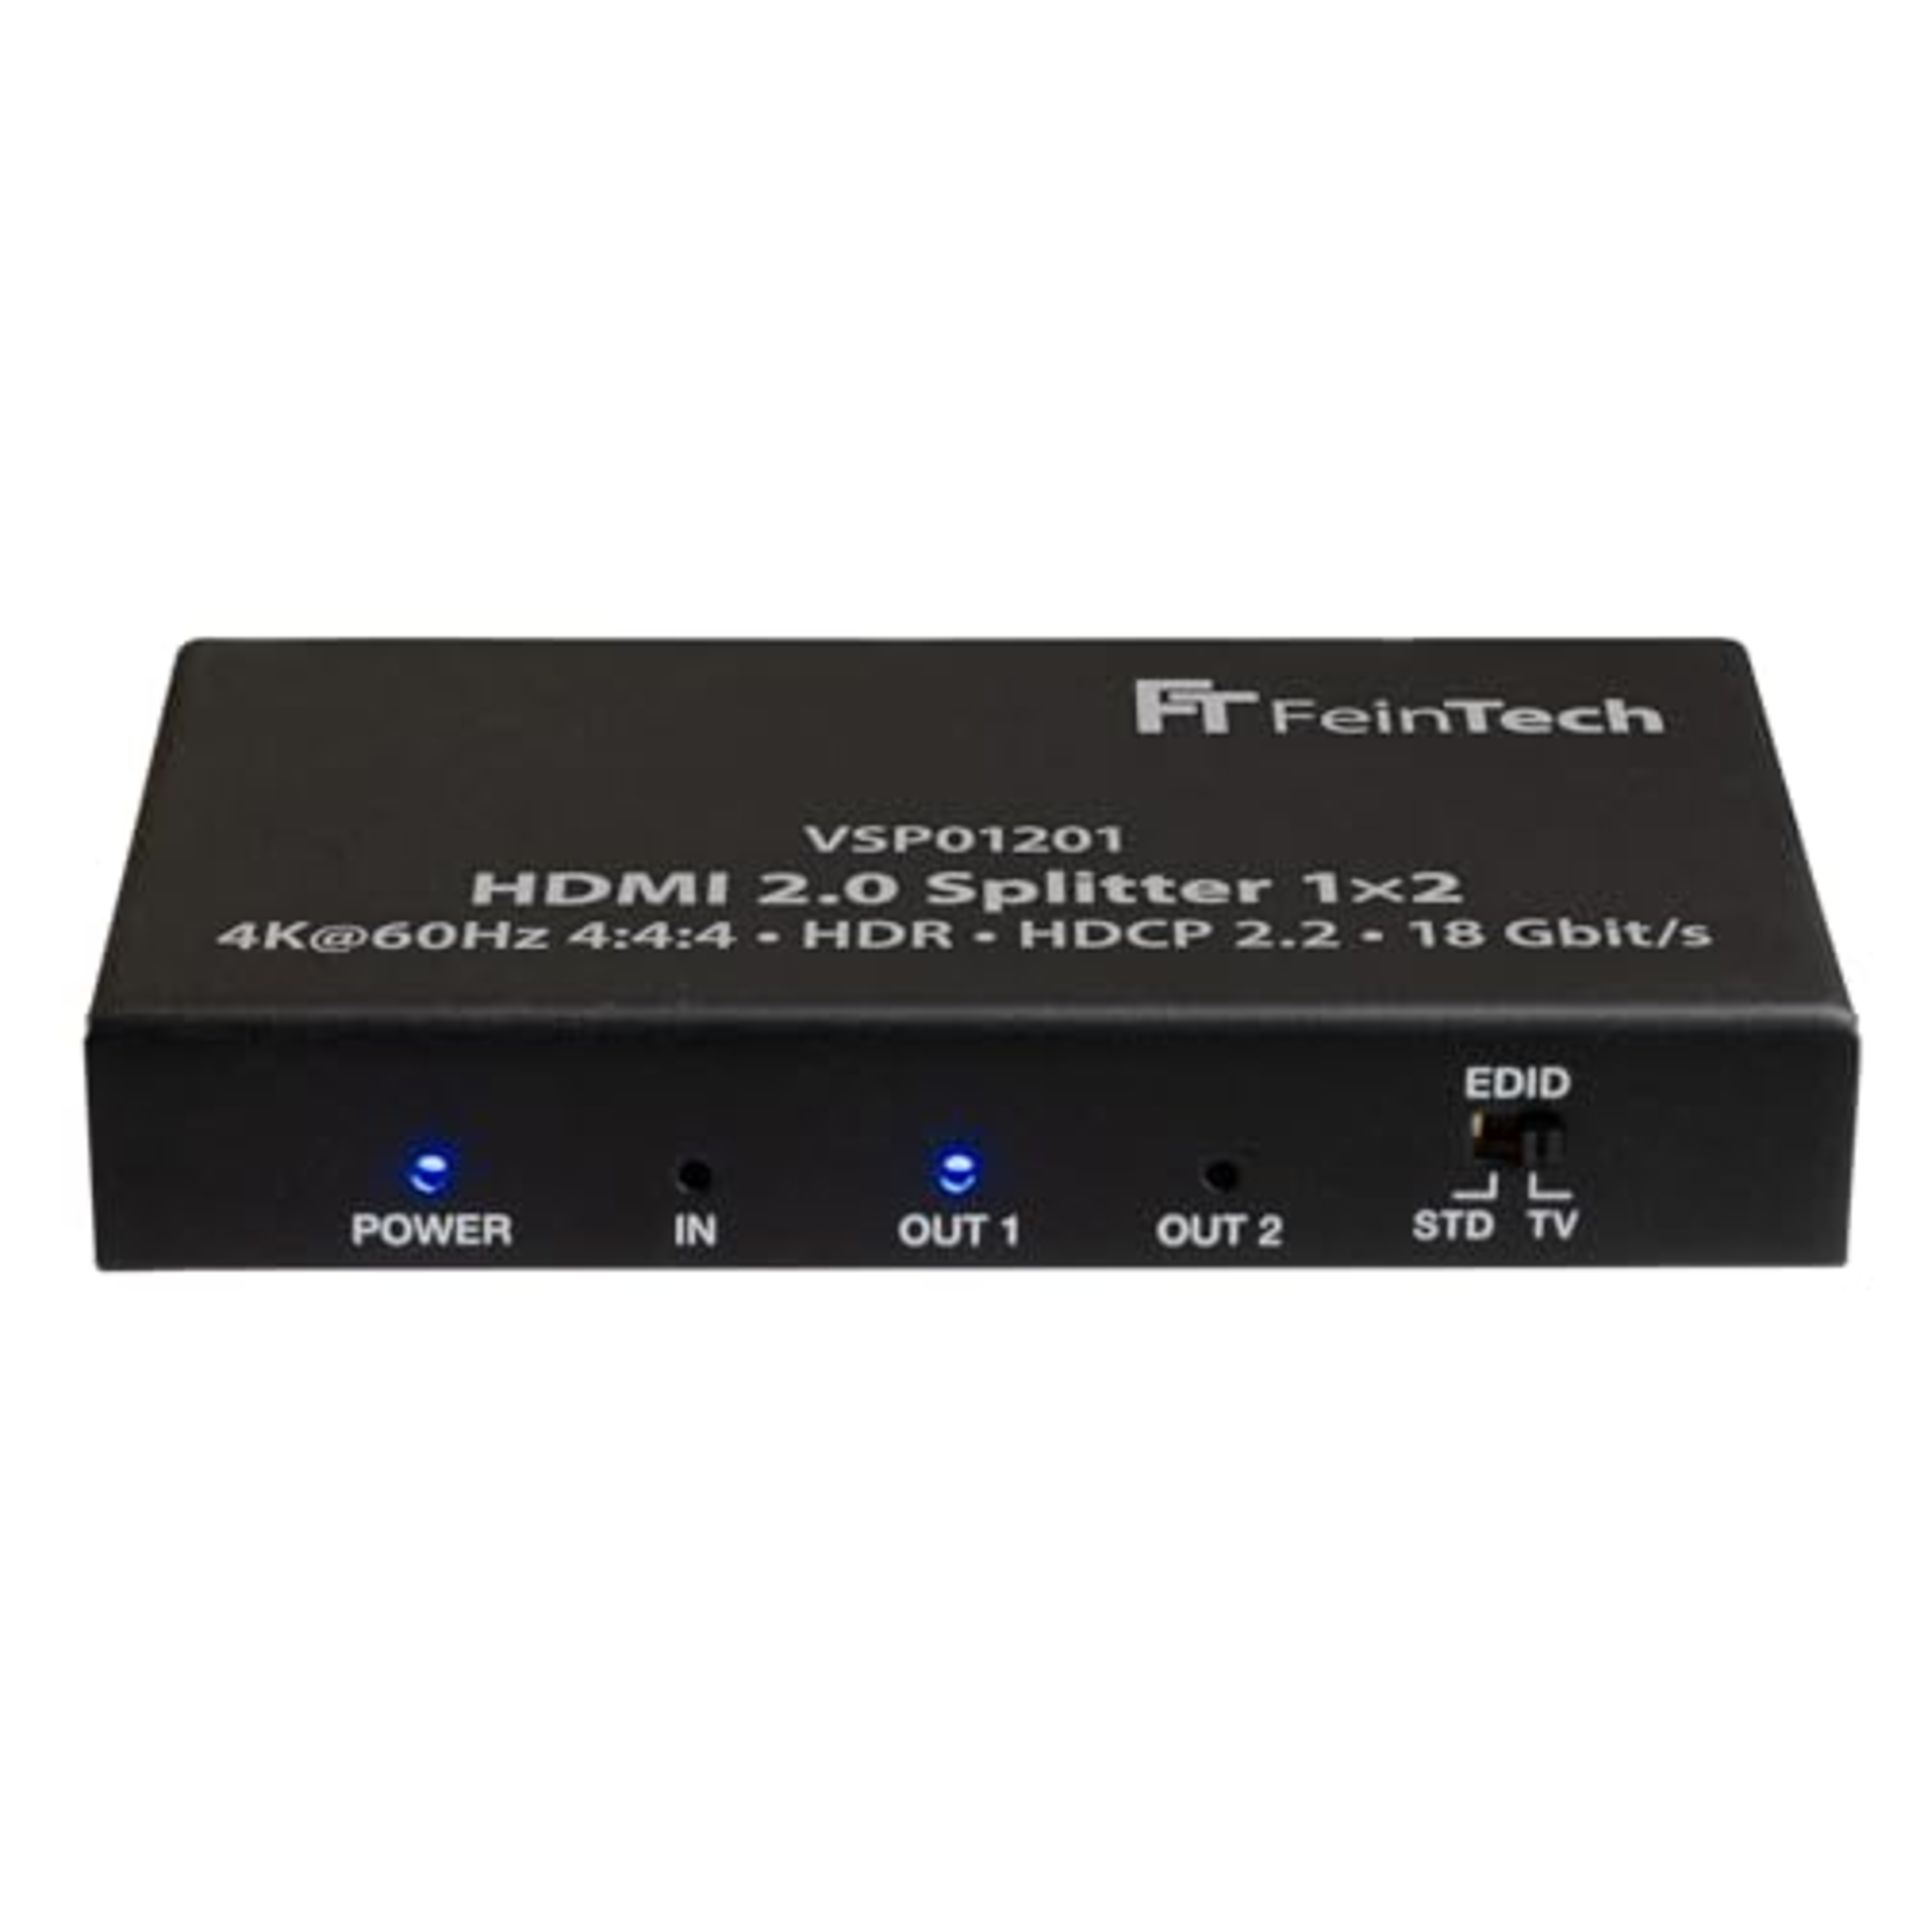 FeinTech VSP01201 HDMI 2.0 Splitter 1 in 2 out distributor Ultra-HD 4K 60Hz YUV 4:4:4